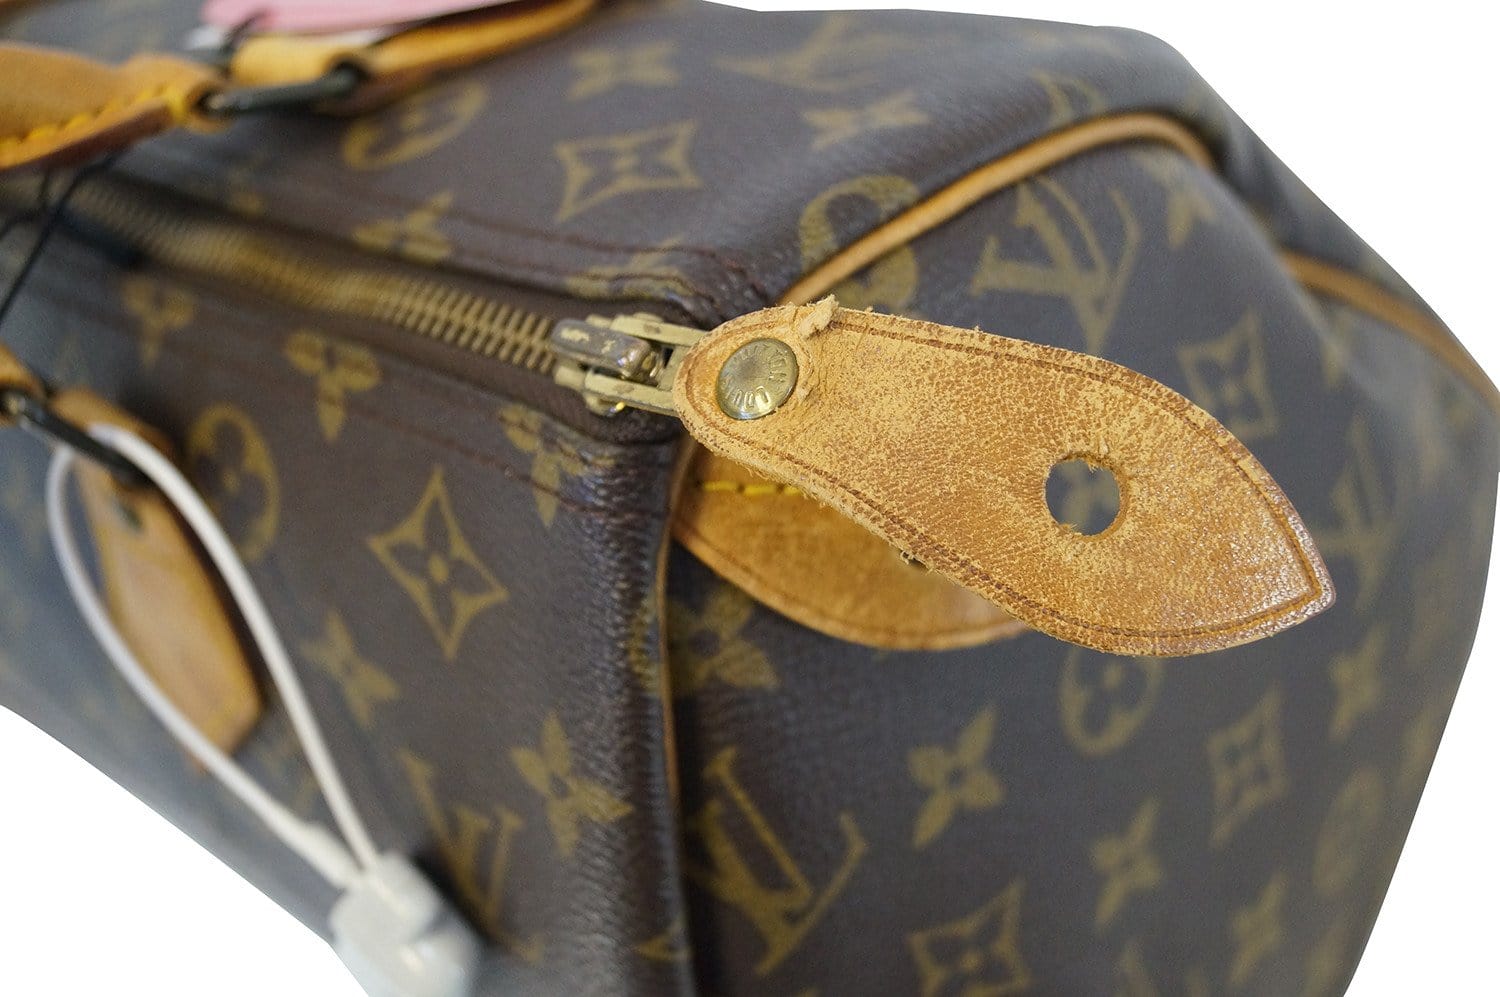 Louis Vuitton Speedy Handbag 388837